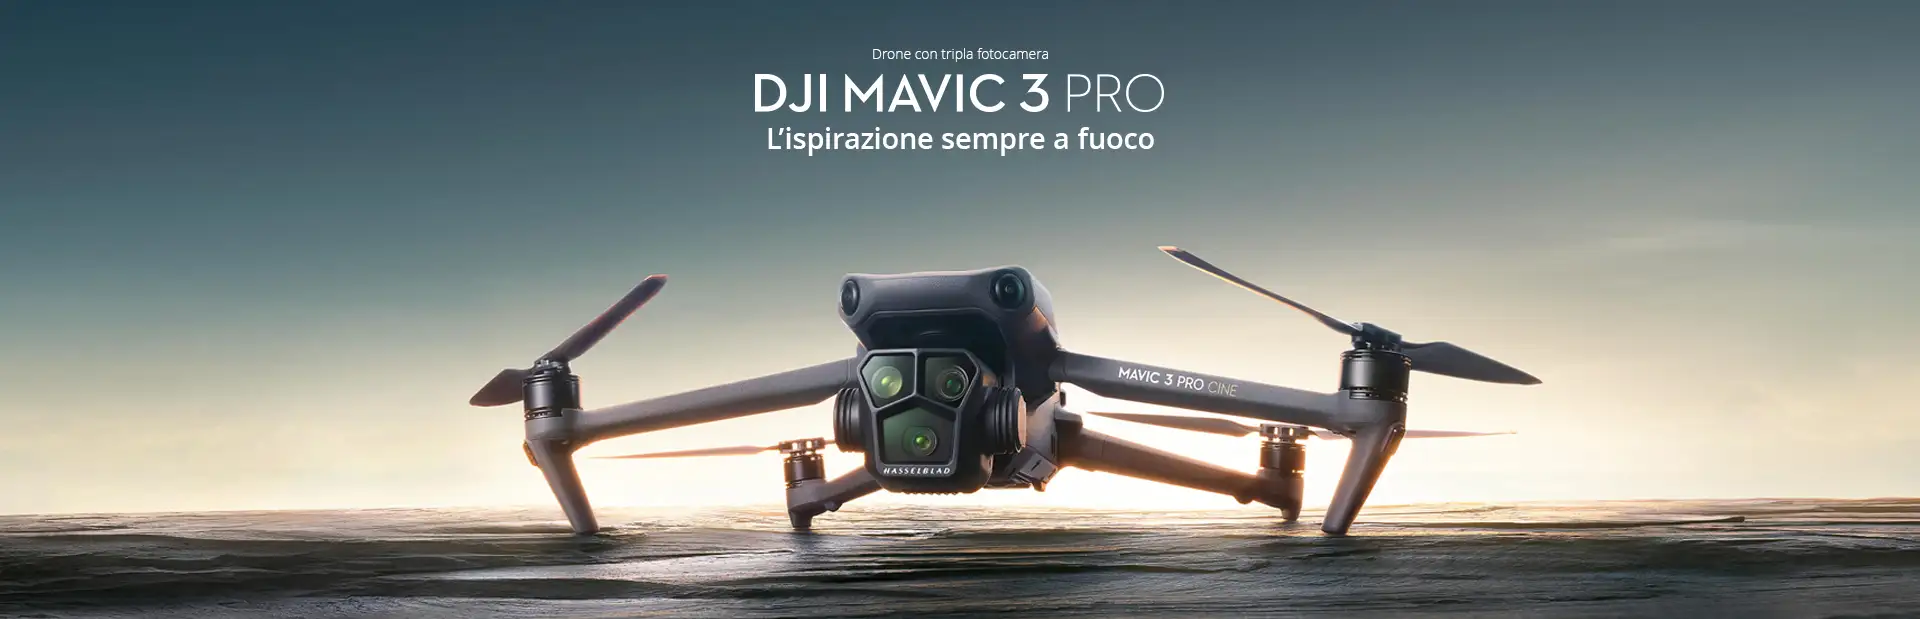 DJI Mavic 3 PRO drone commerciale